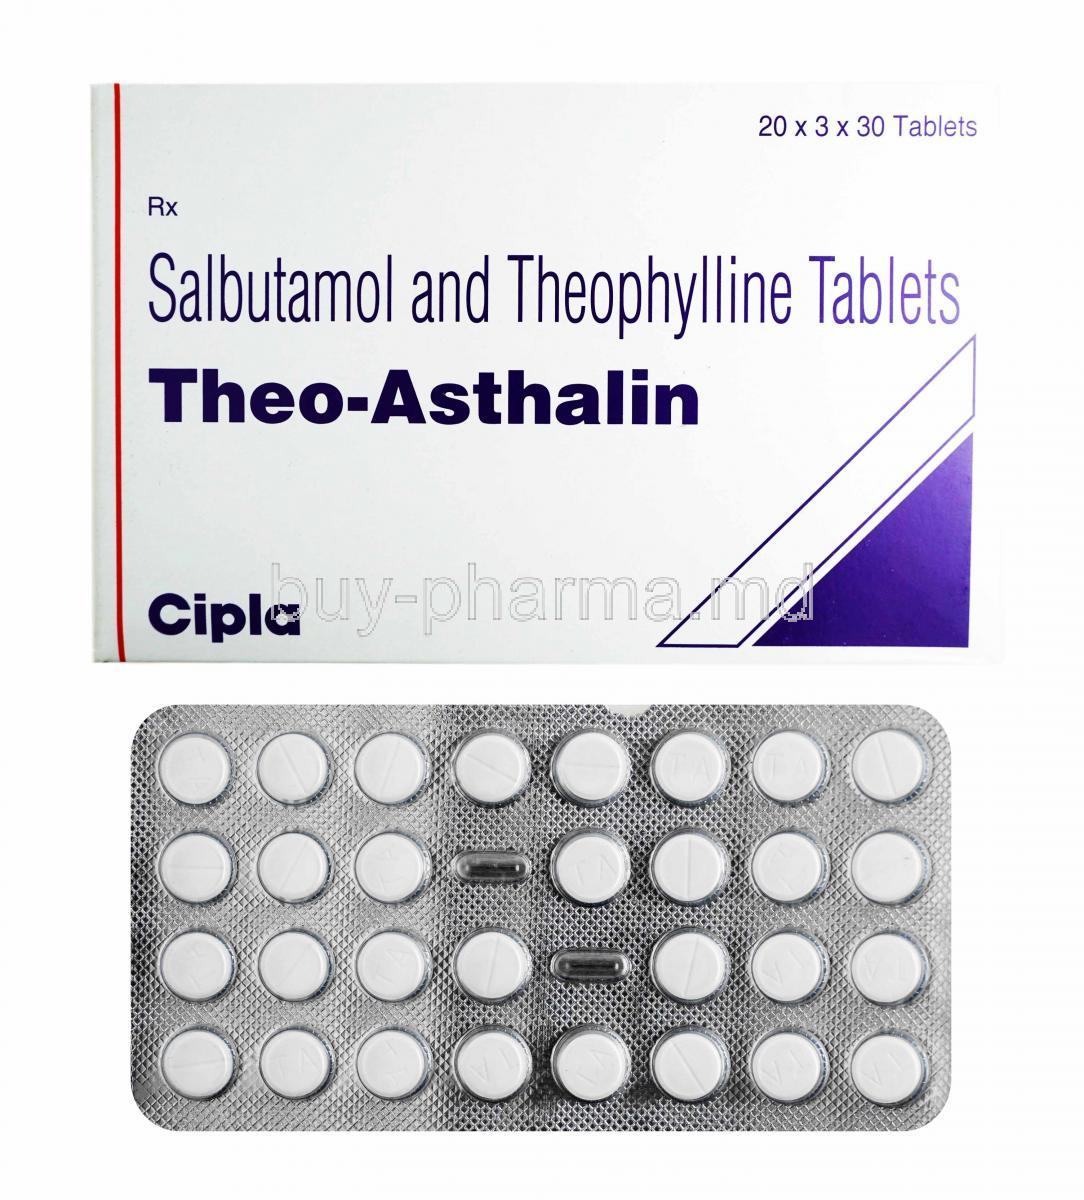 Theo-Asthalin, Salbutamol 2mg and Theophylline 100mg box and tablets